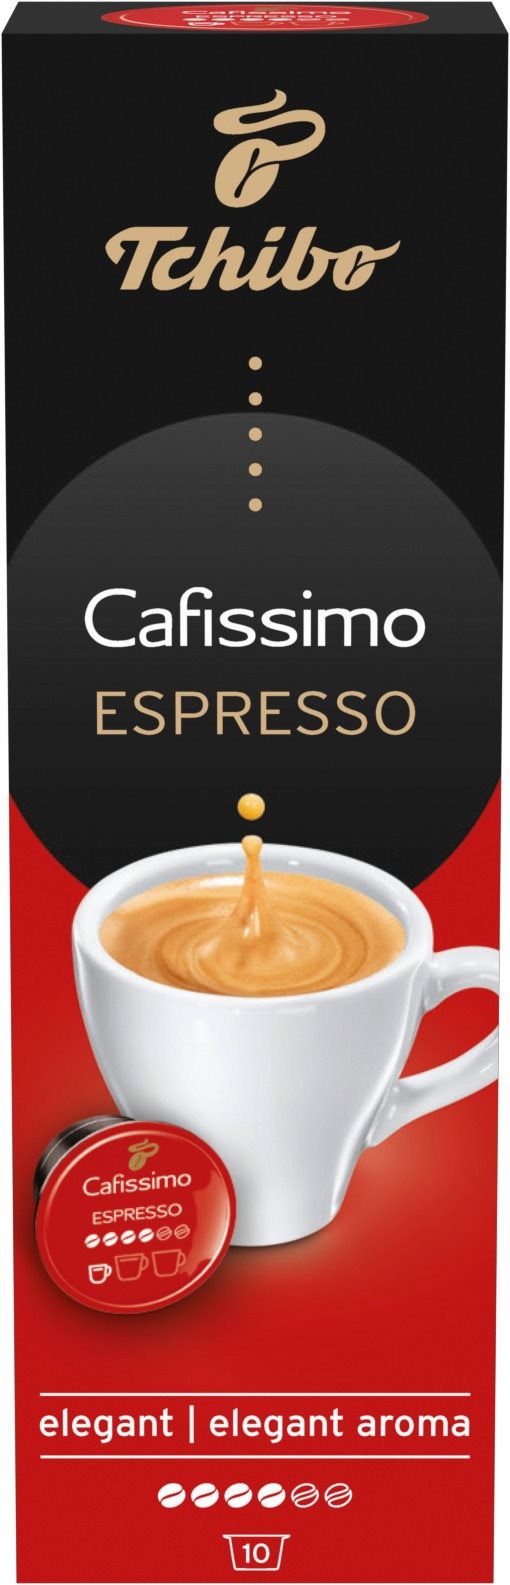 Tchibo Cafissimo Espresso Elegant Aroma 70g